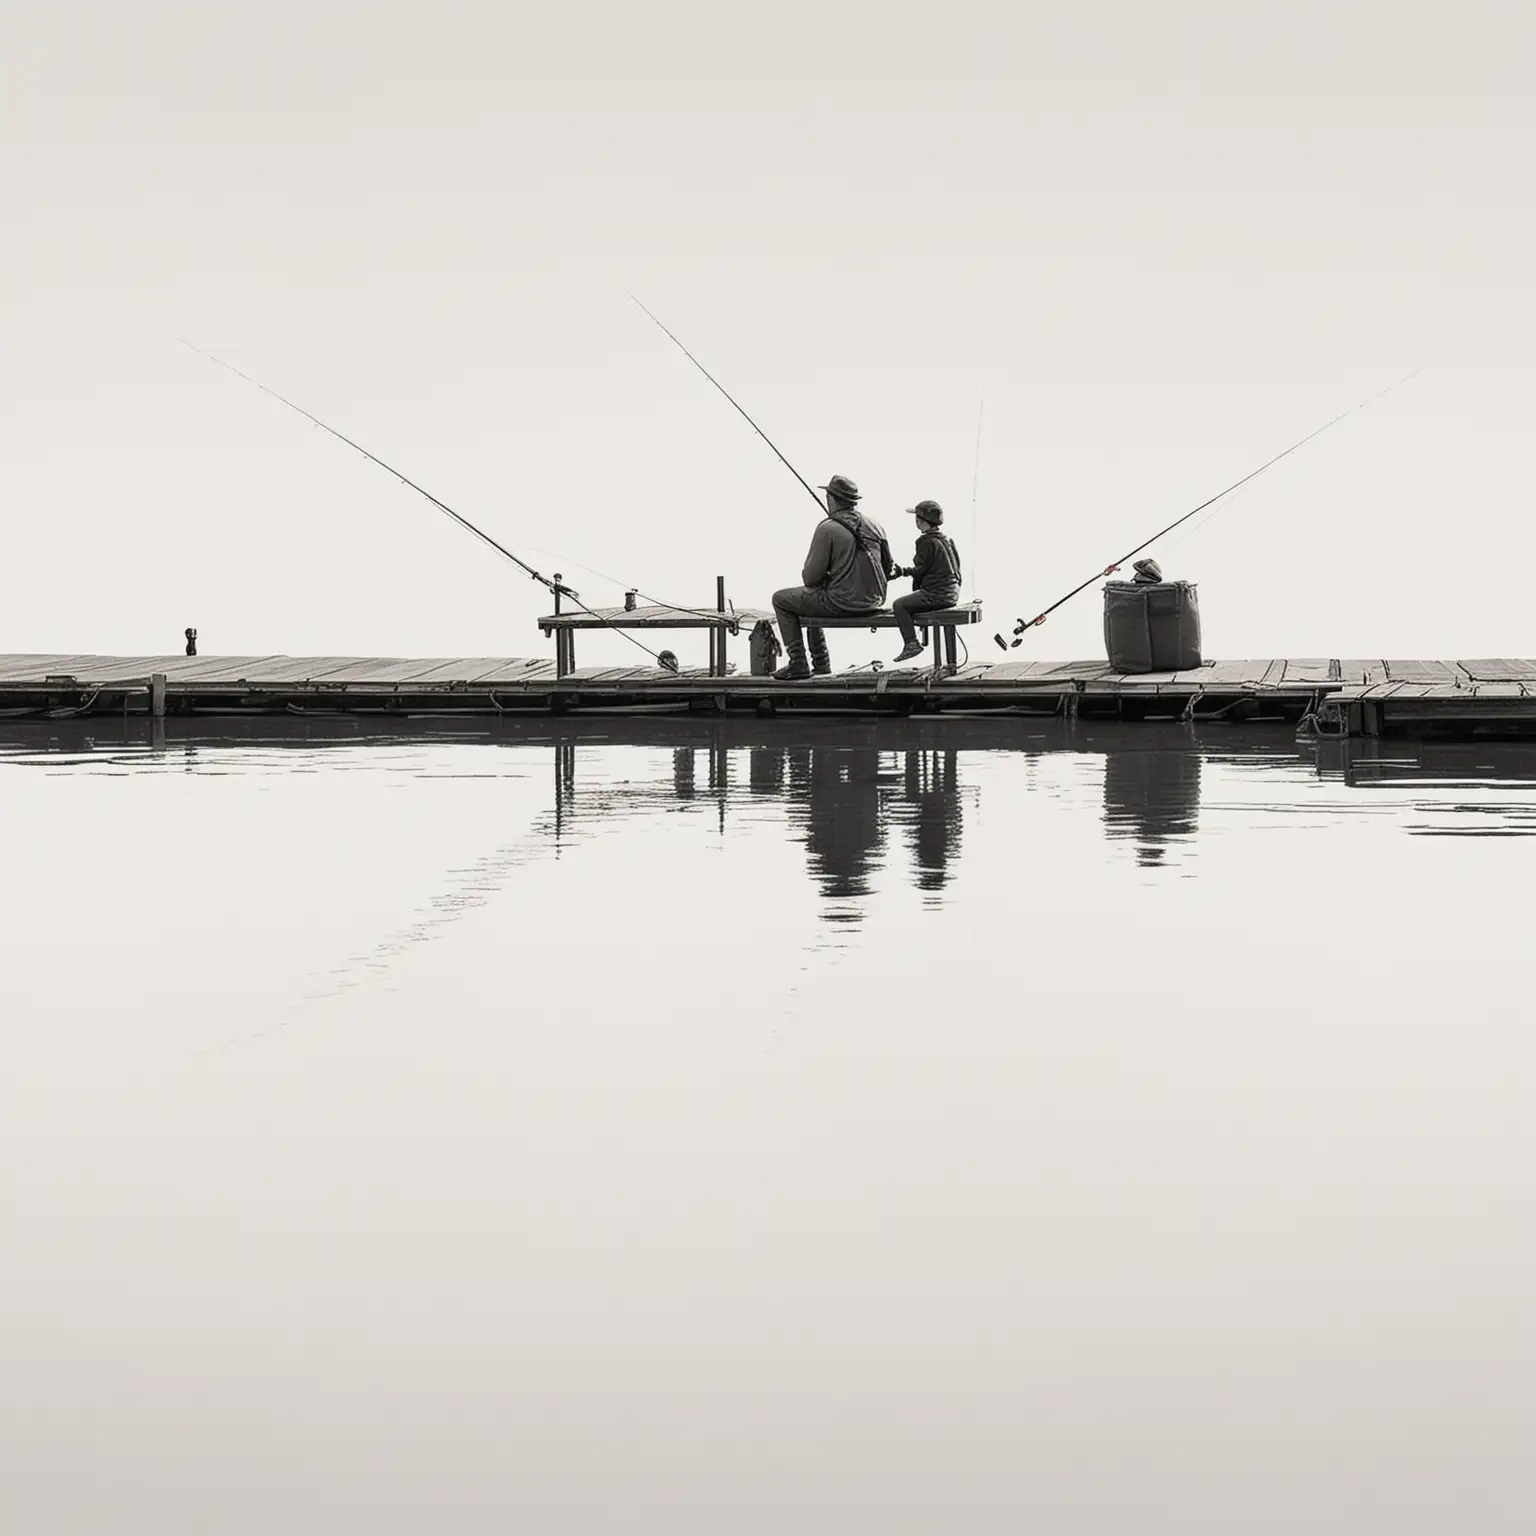 Father and Child Fishing on Dock Minimalistic SVG Illustration